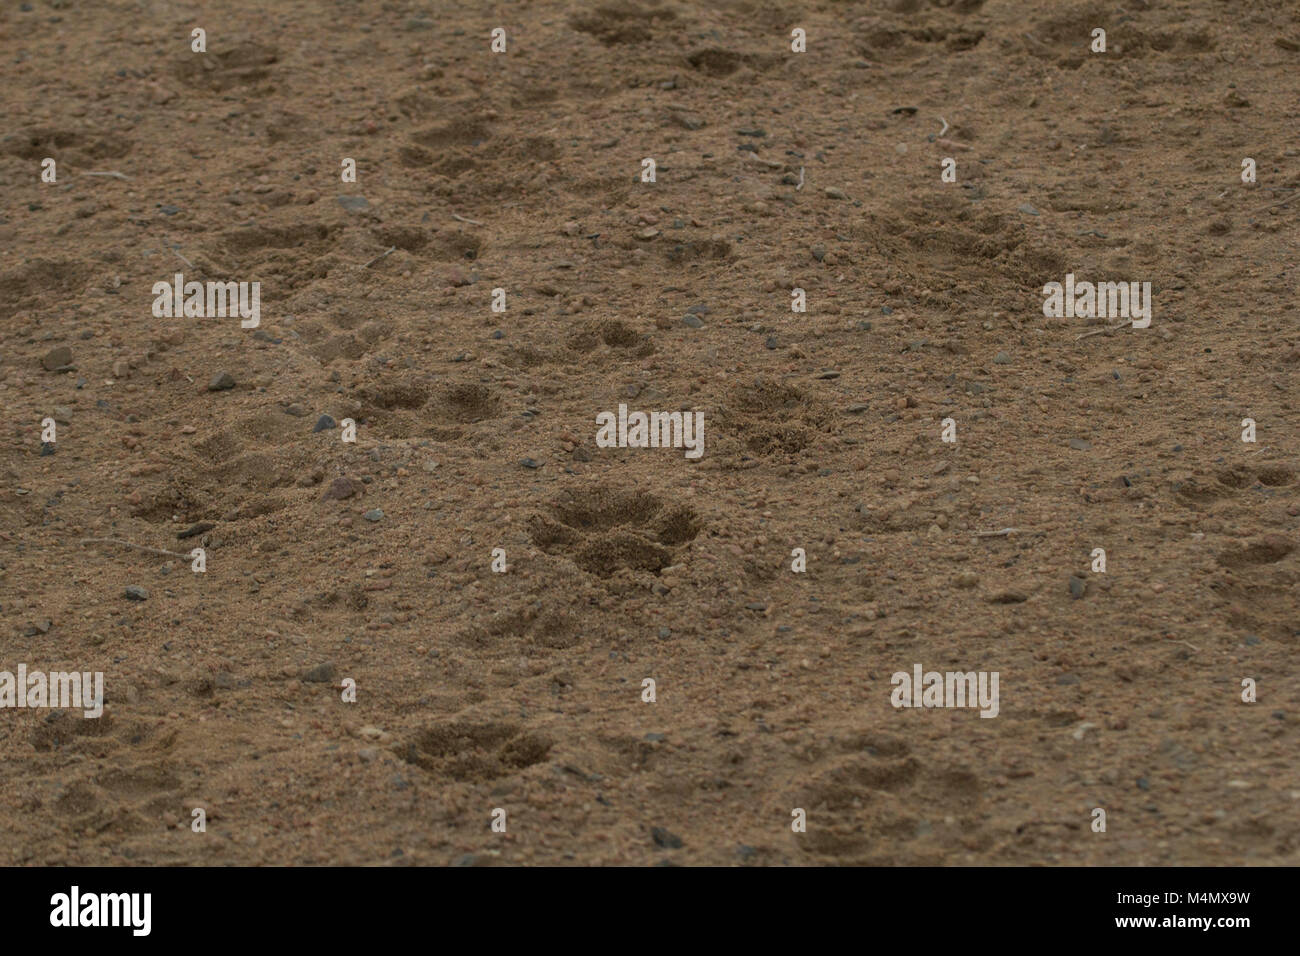 Wild dog paw print tracks in the desert of Wadi el Gamal national park, Egypt. Stock Photo